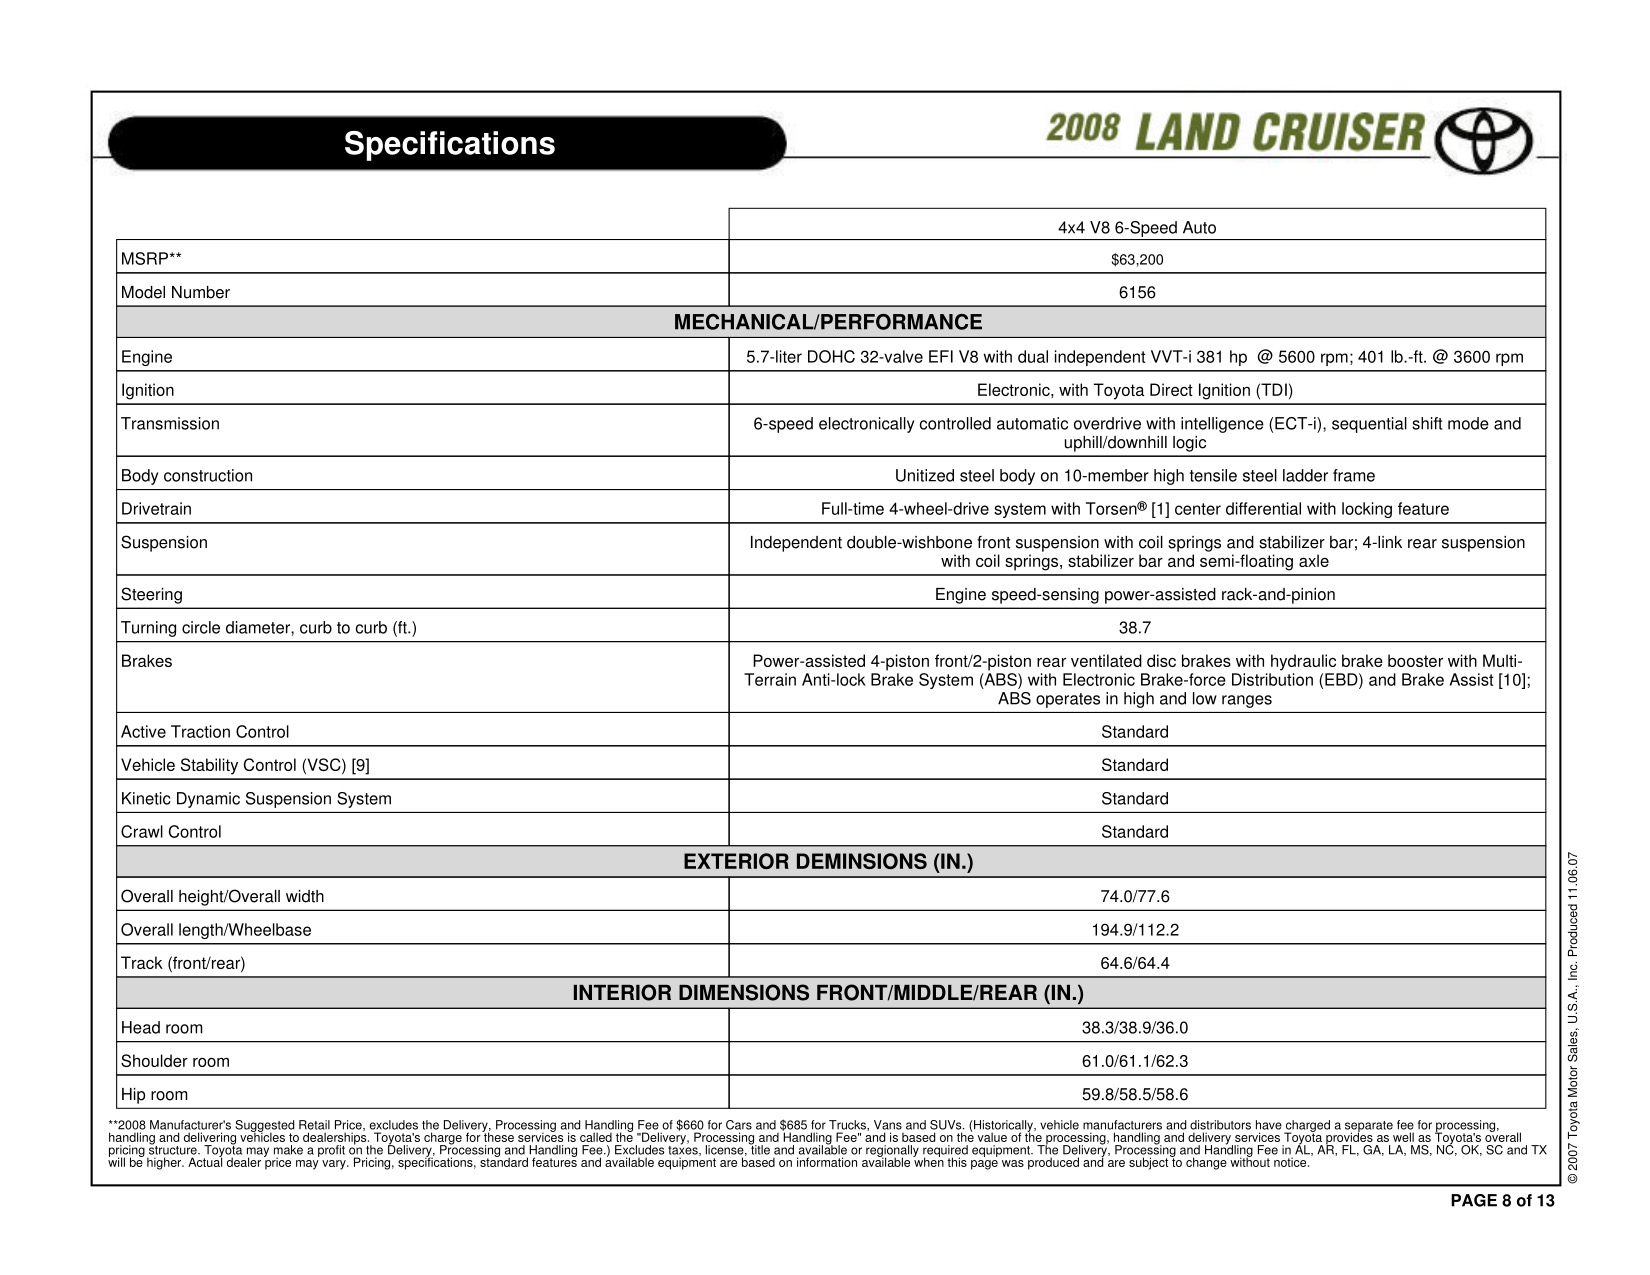 2008 Toyota Land Cruiser Brochure Page 6